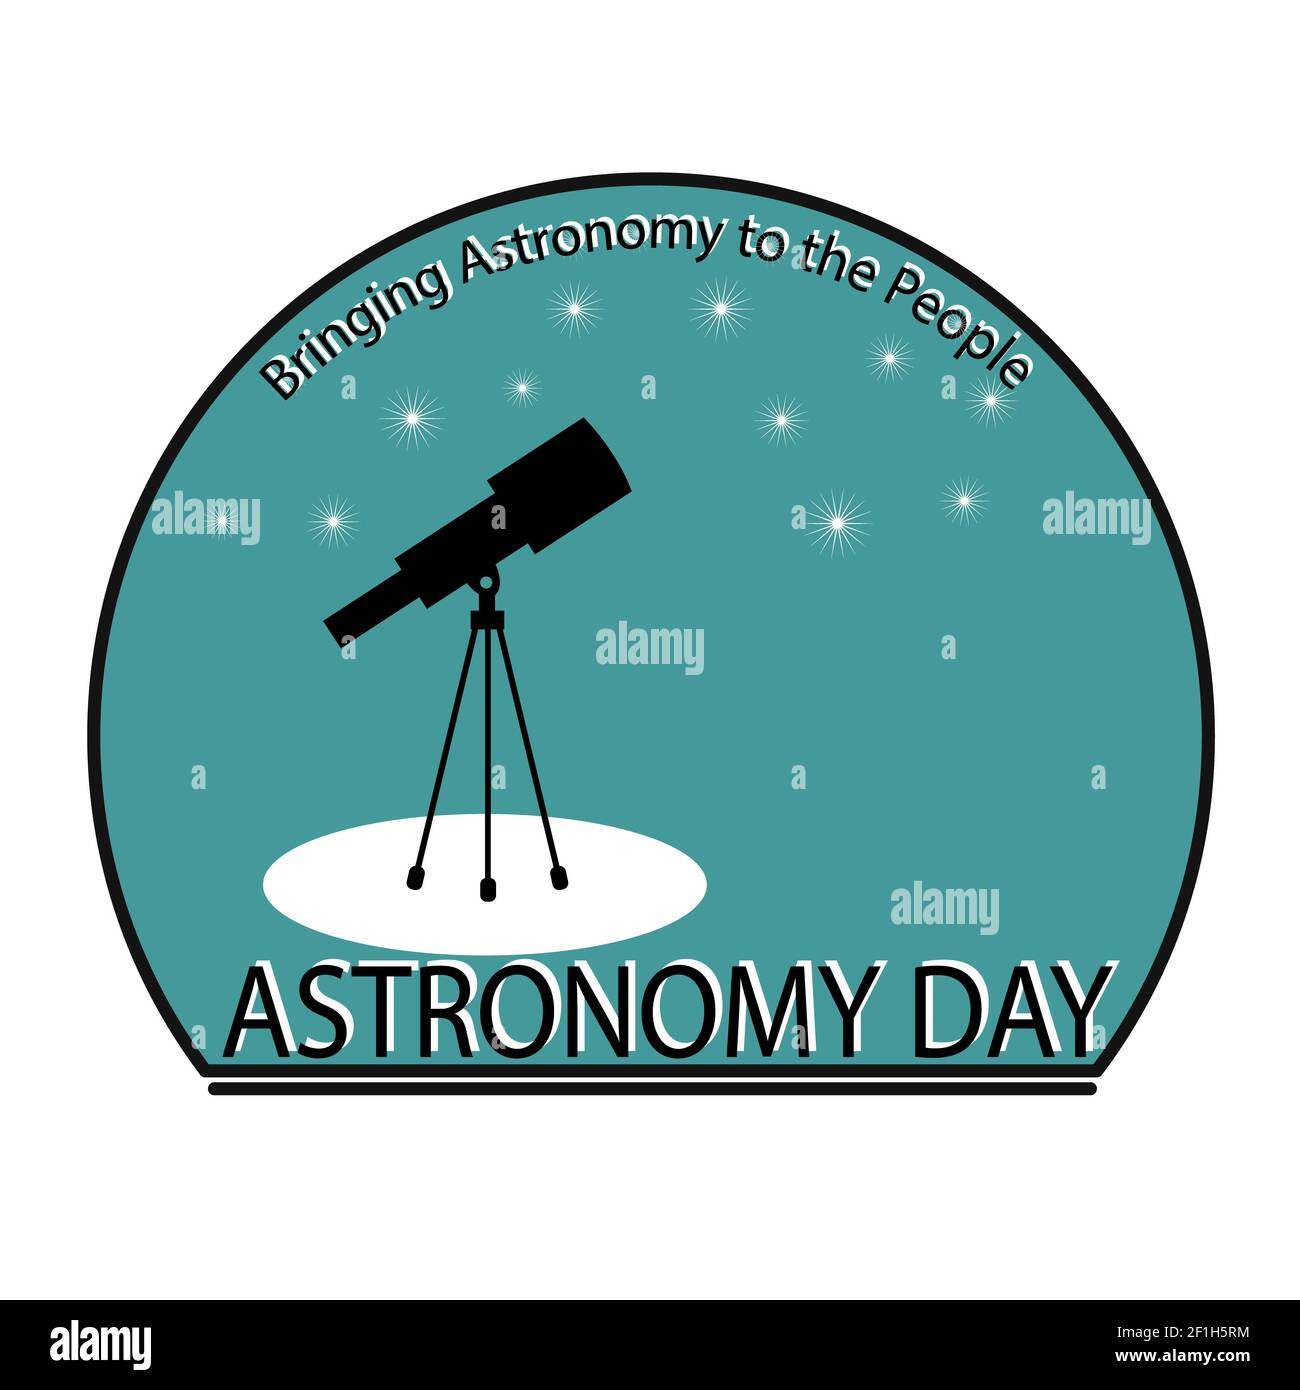 Astronomy Day. Stock Photo